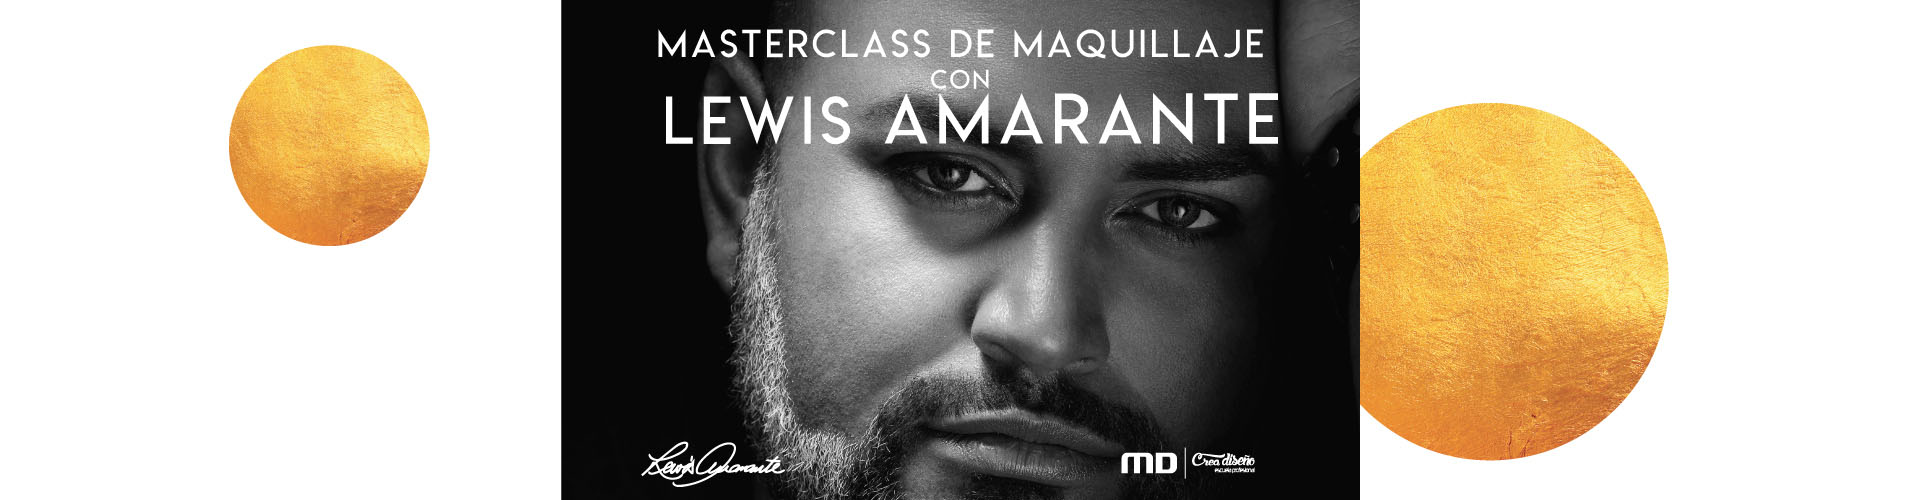 MasterClass de Maquillaje con Lewis Amarante